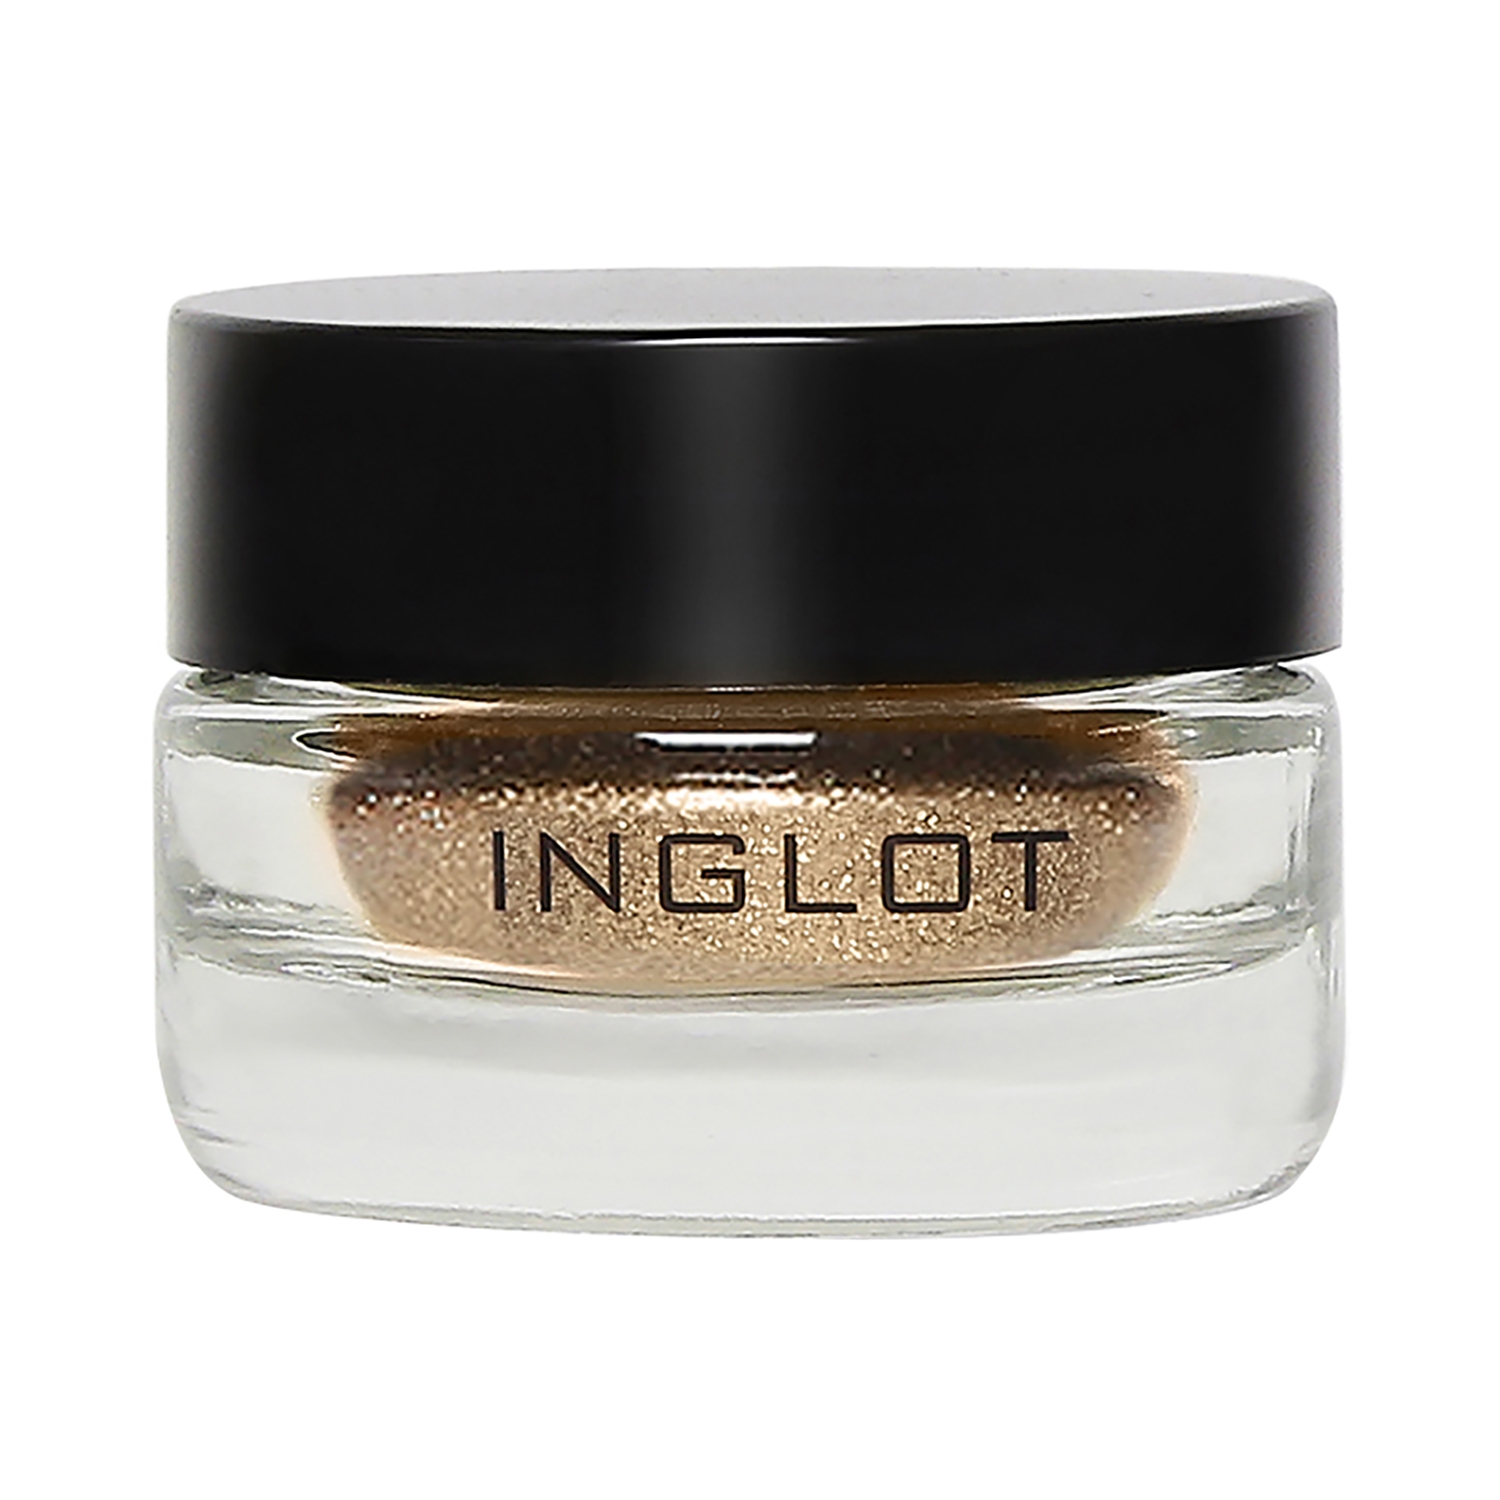 INGLOT | INGLOT Body Sparkles 63 (1g)